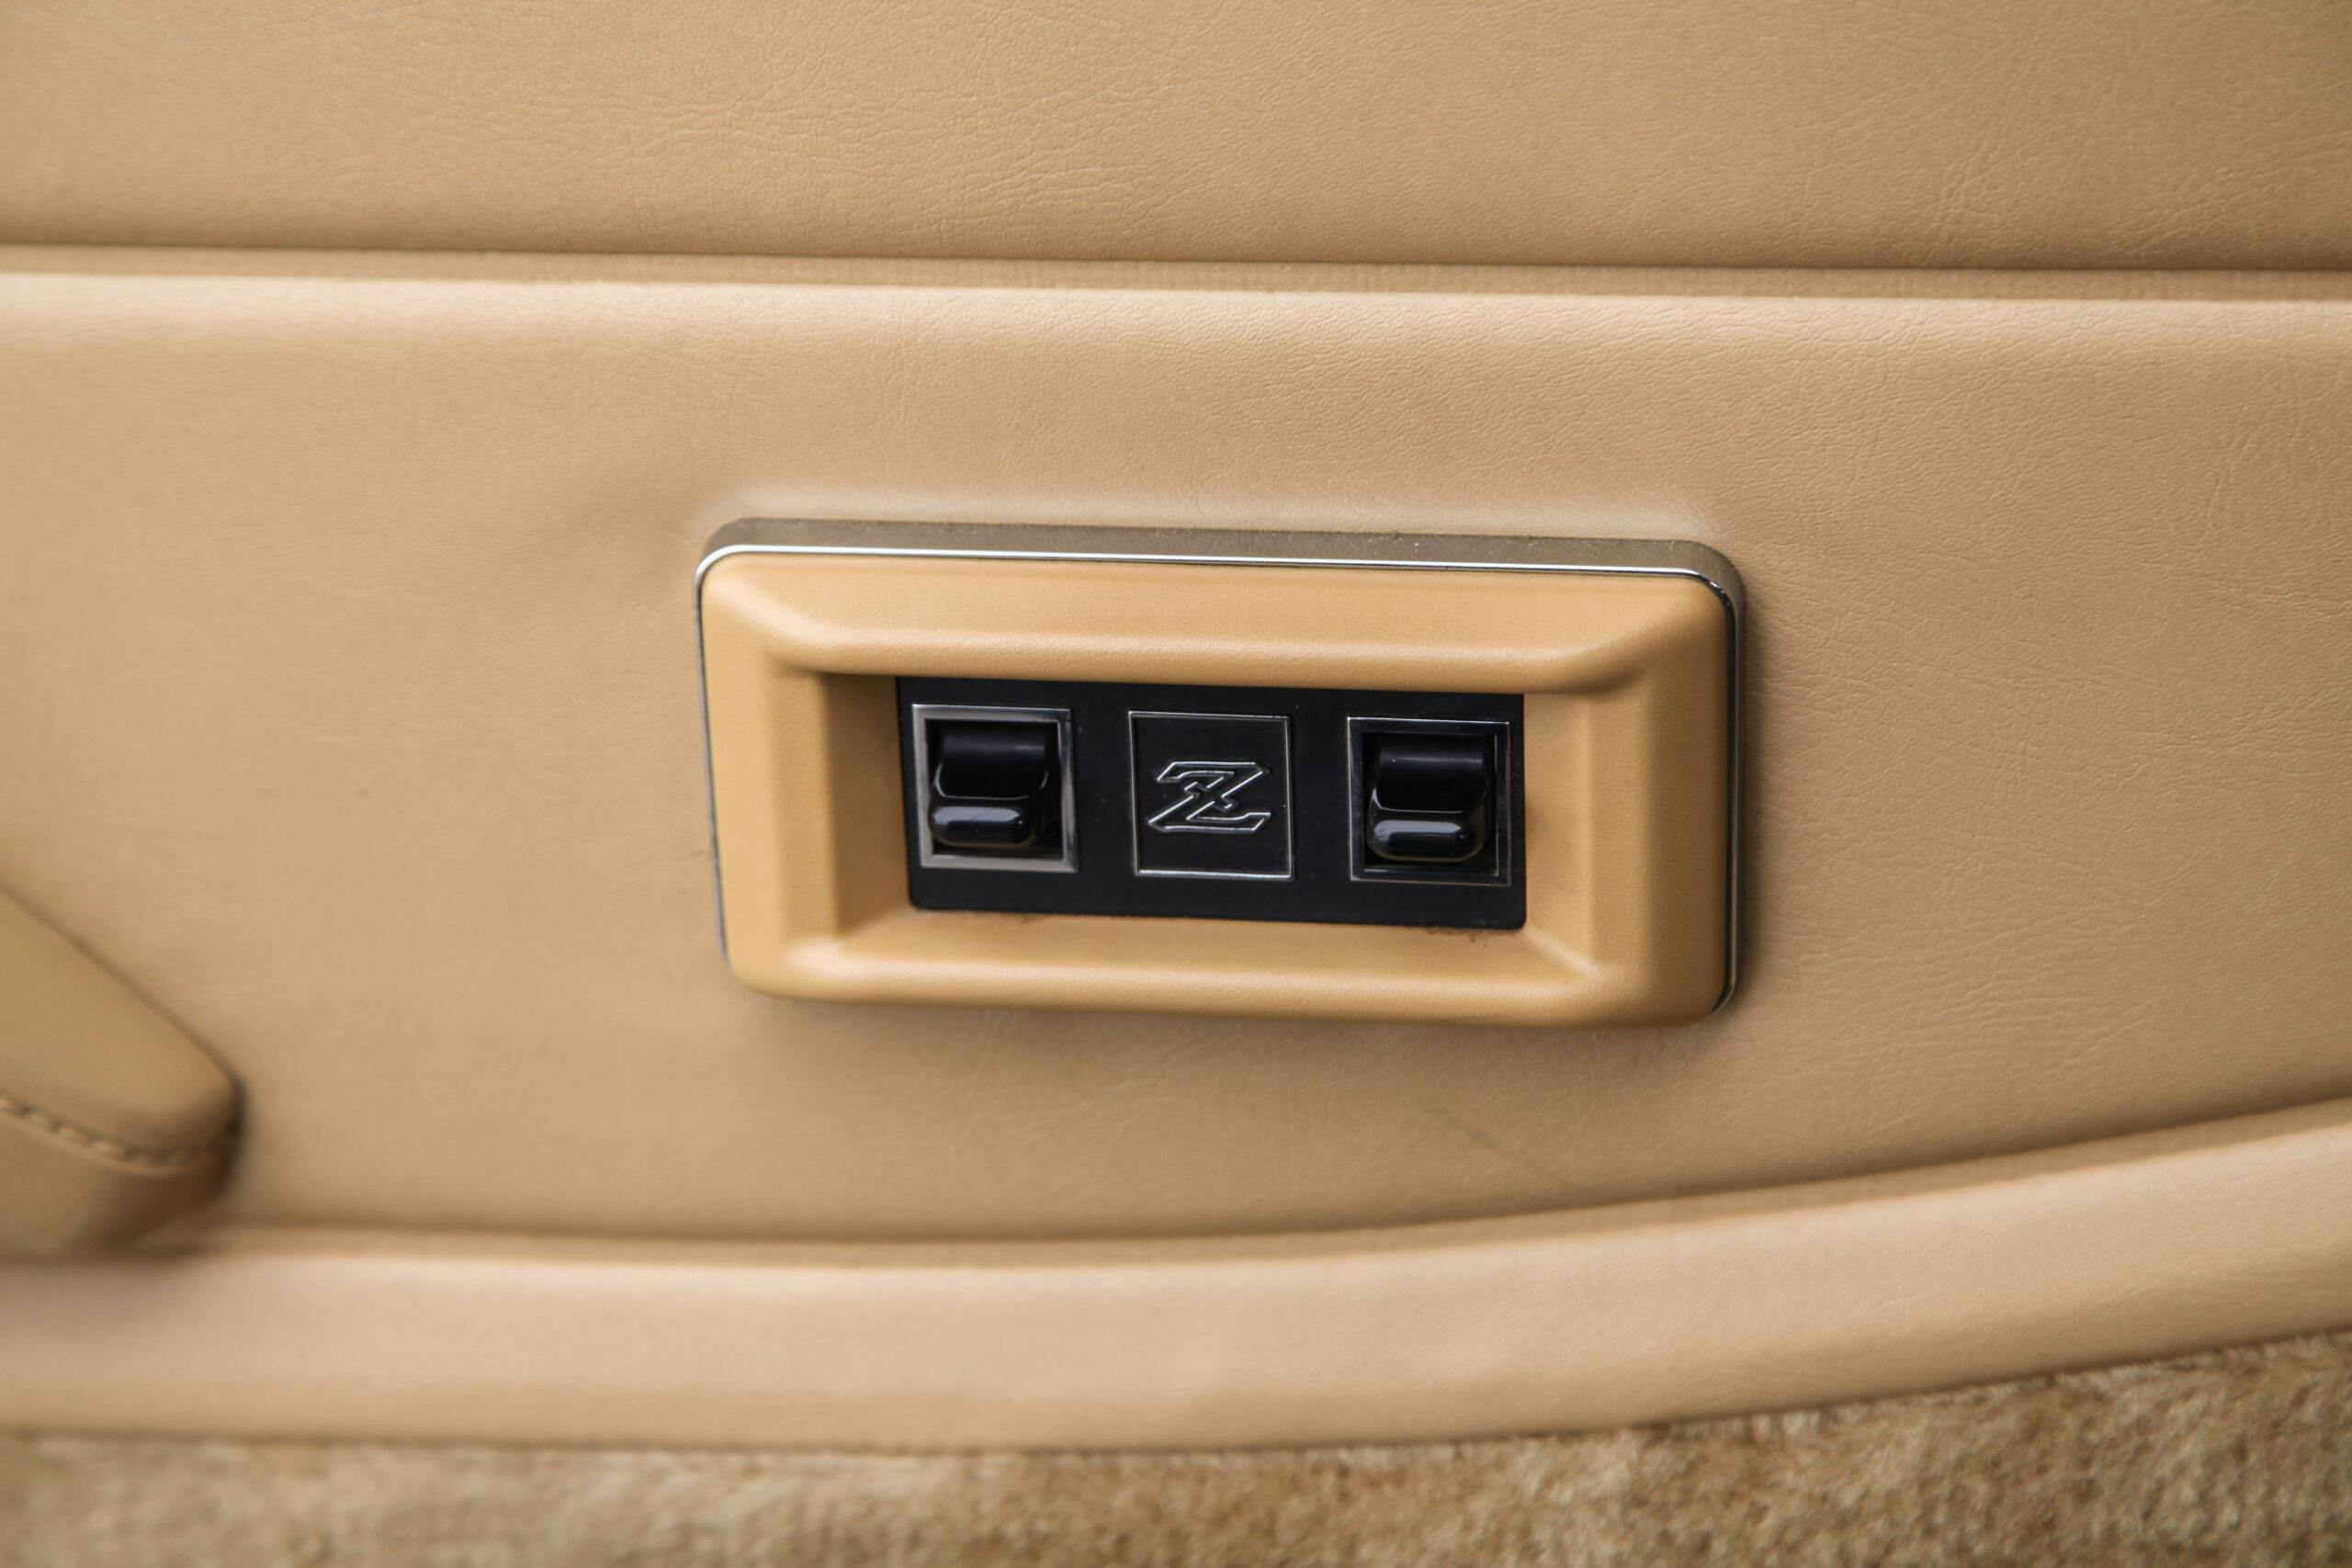 1981 Datsun 280ZX interior power window switches